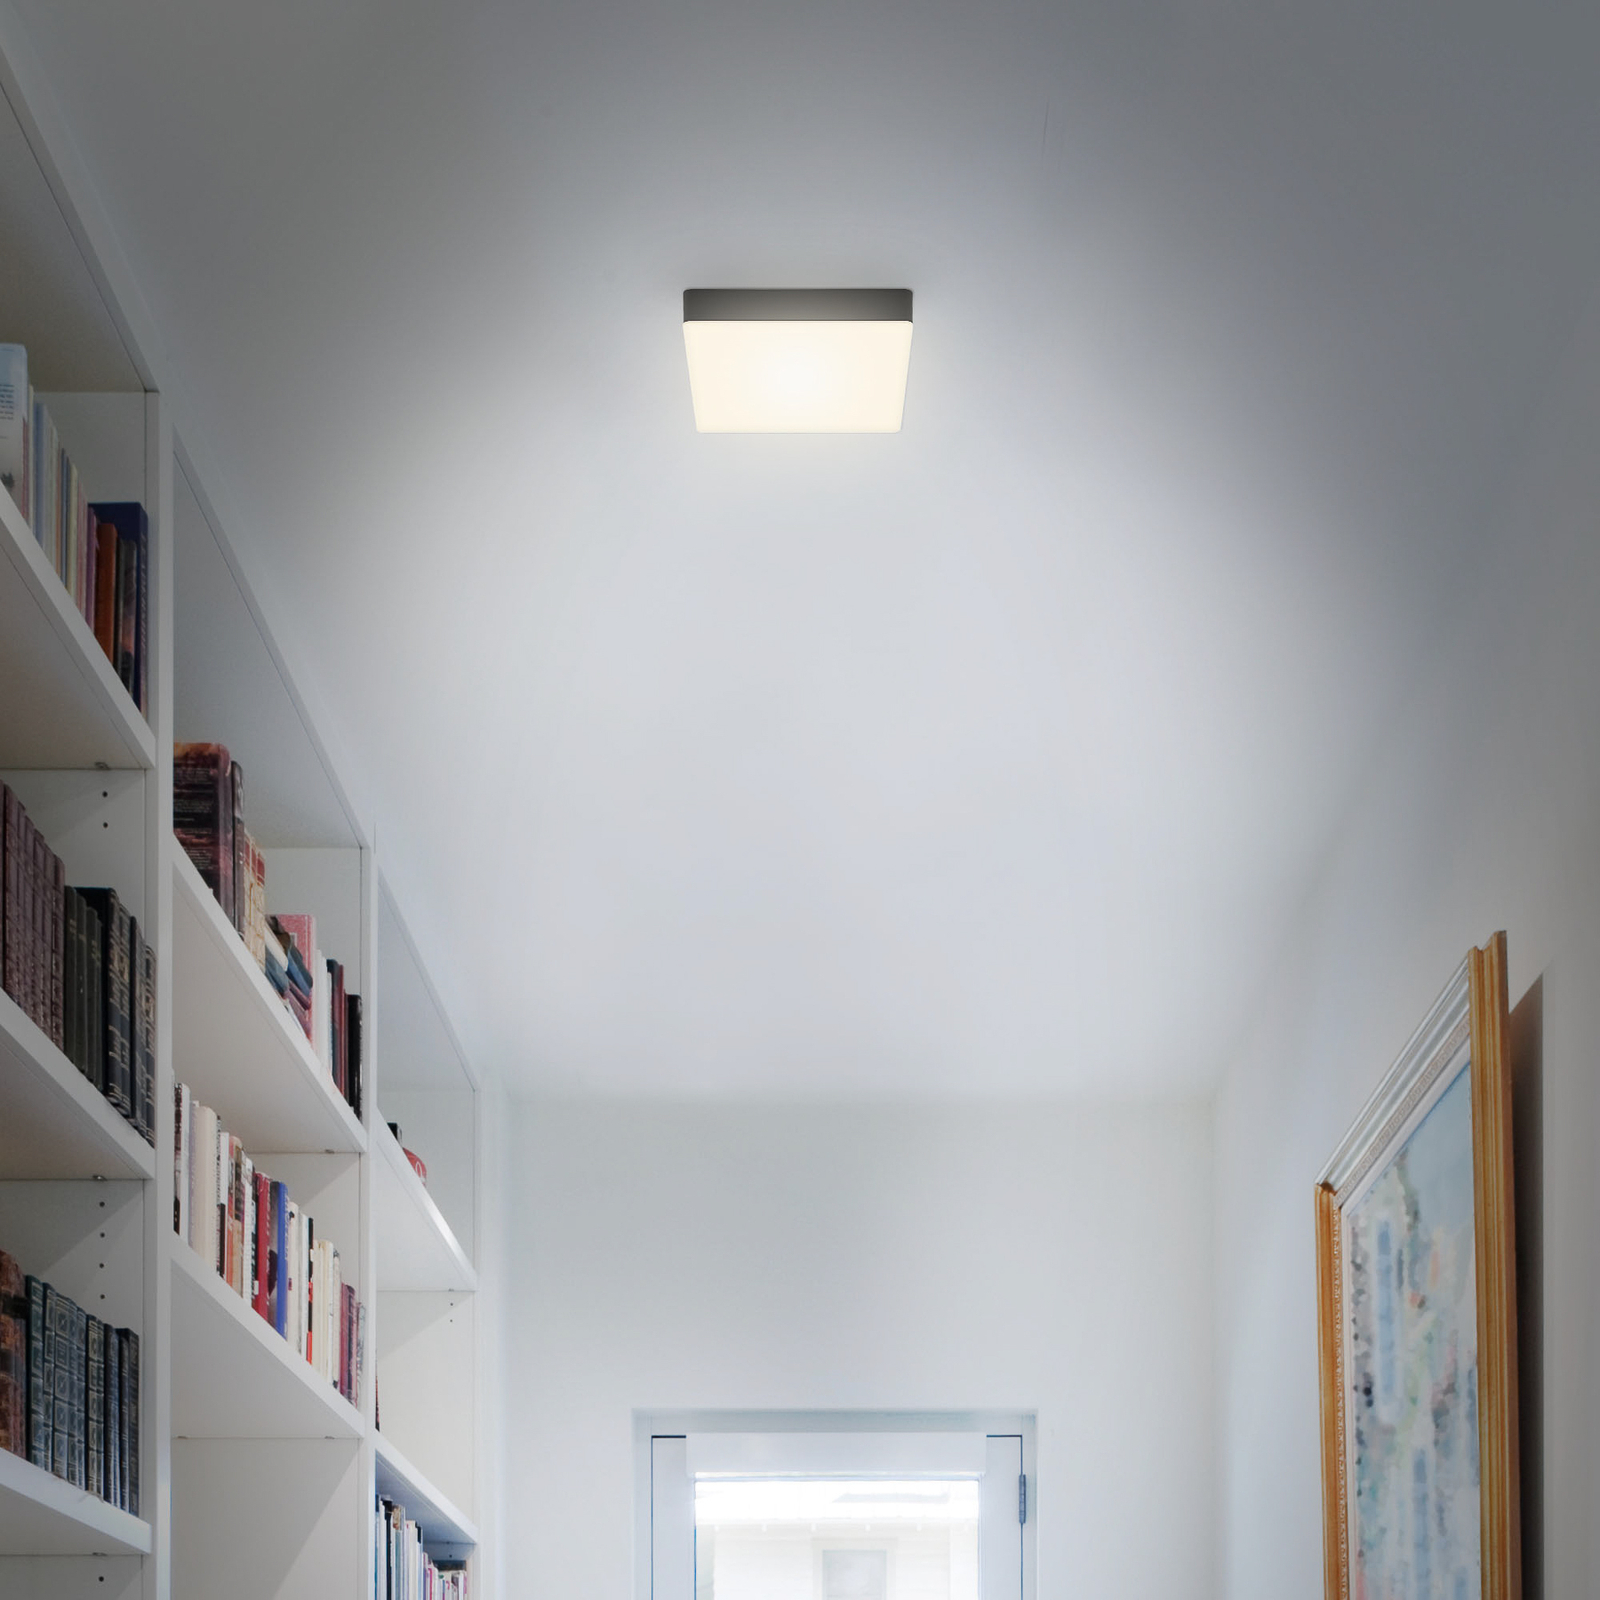 Flame LED ceiling light, 15.7 x 15.7 cm, black